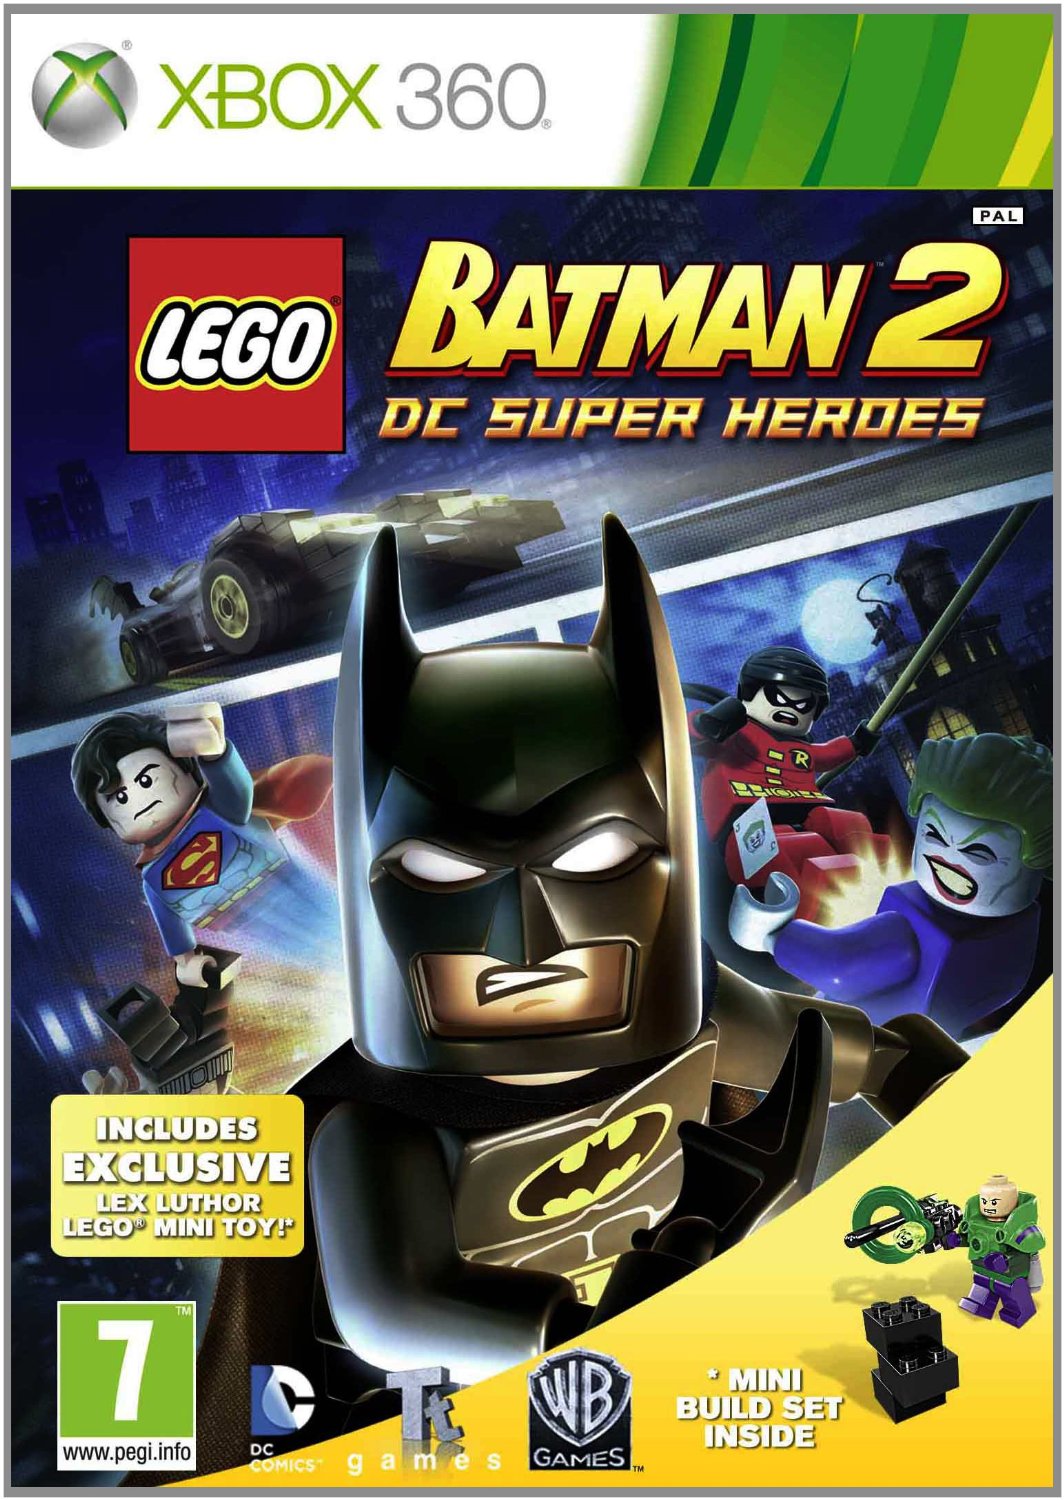 Batman xbox. Лего Бэтмен хвох 360. LEGO Batman 2 DC super Heroes Xbox 360. Лего Бэтмен 1 Xbox 360 диск. Игры лего на хбокс 360.